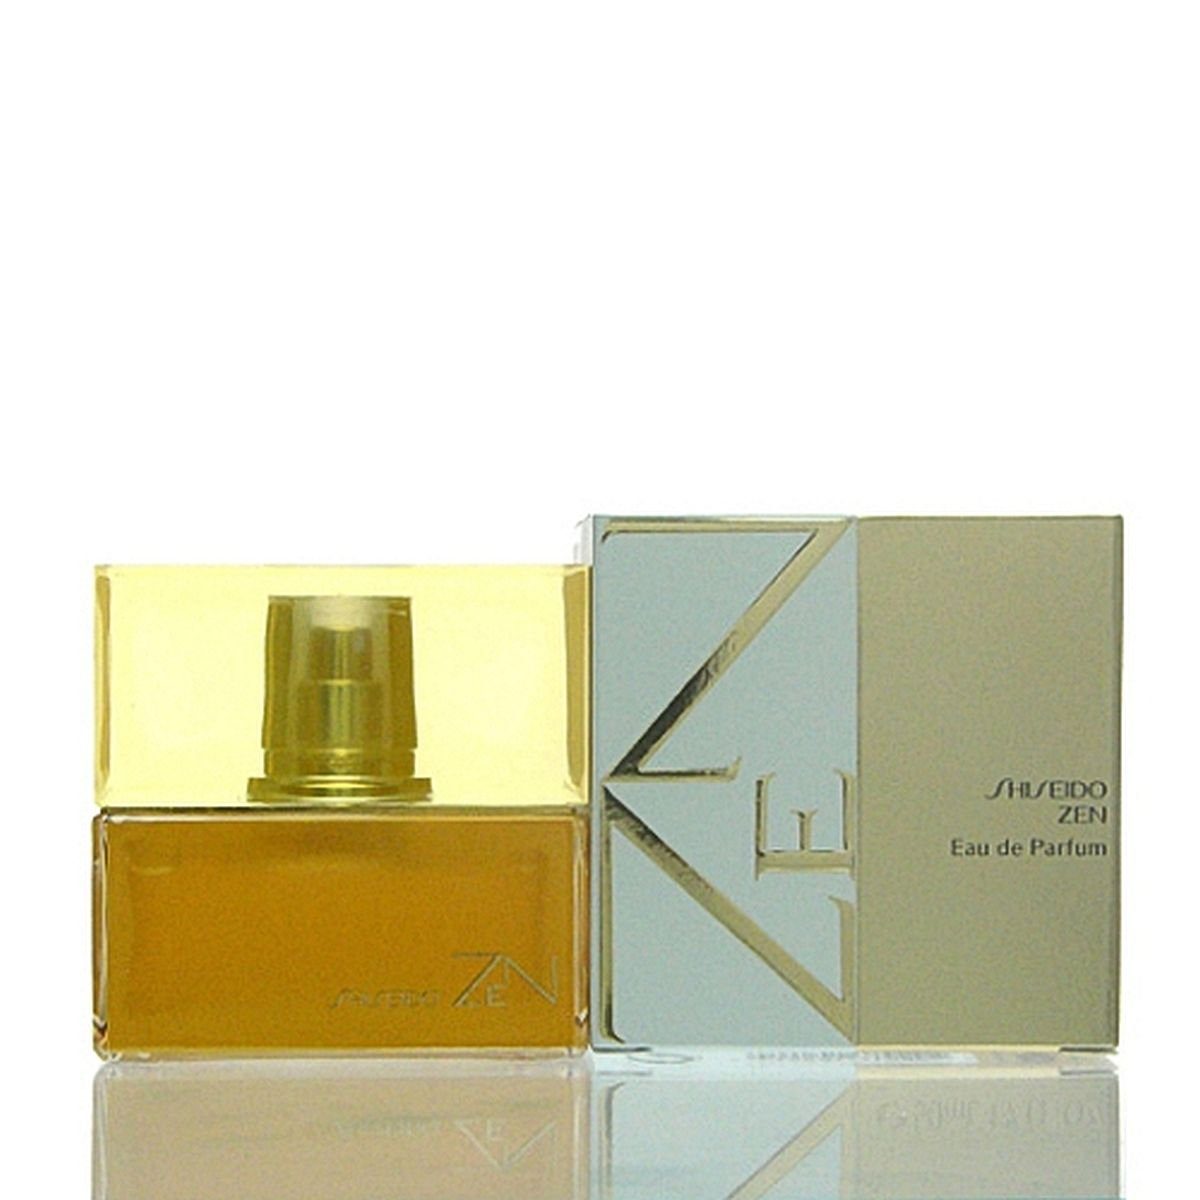 SHISEIDO Eau de Parfum Shiseido ZEN Eau de Parfum 50 ml | Eau de Parfum